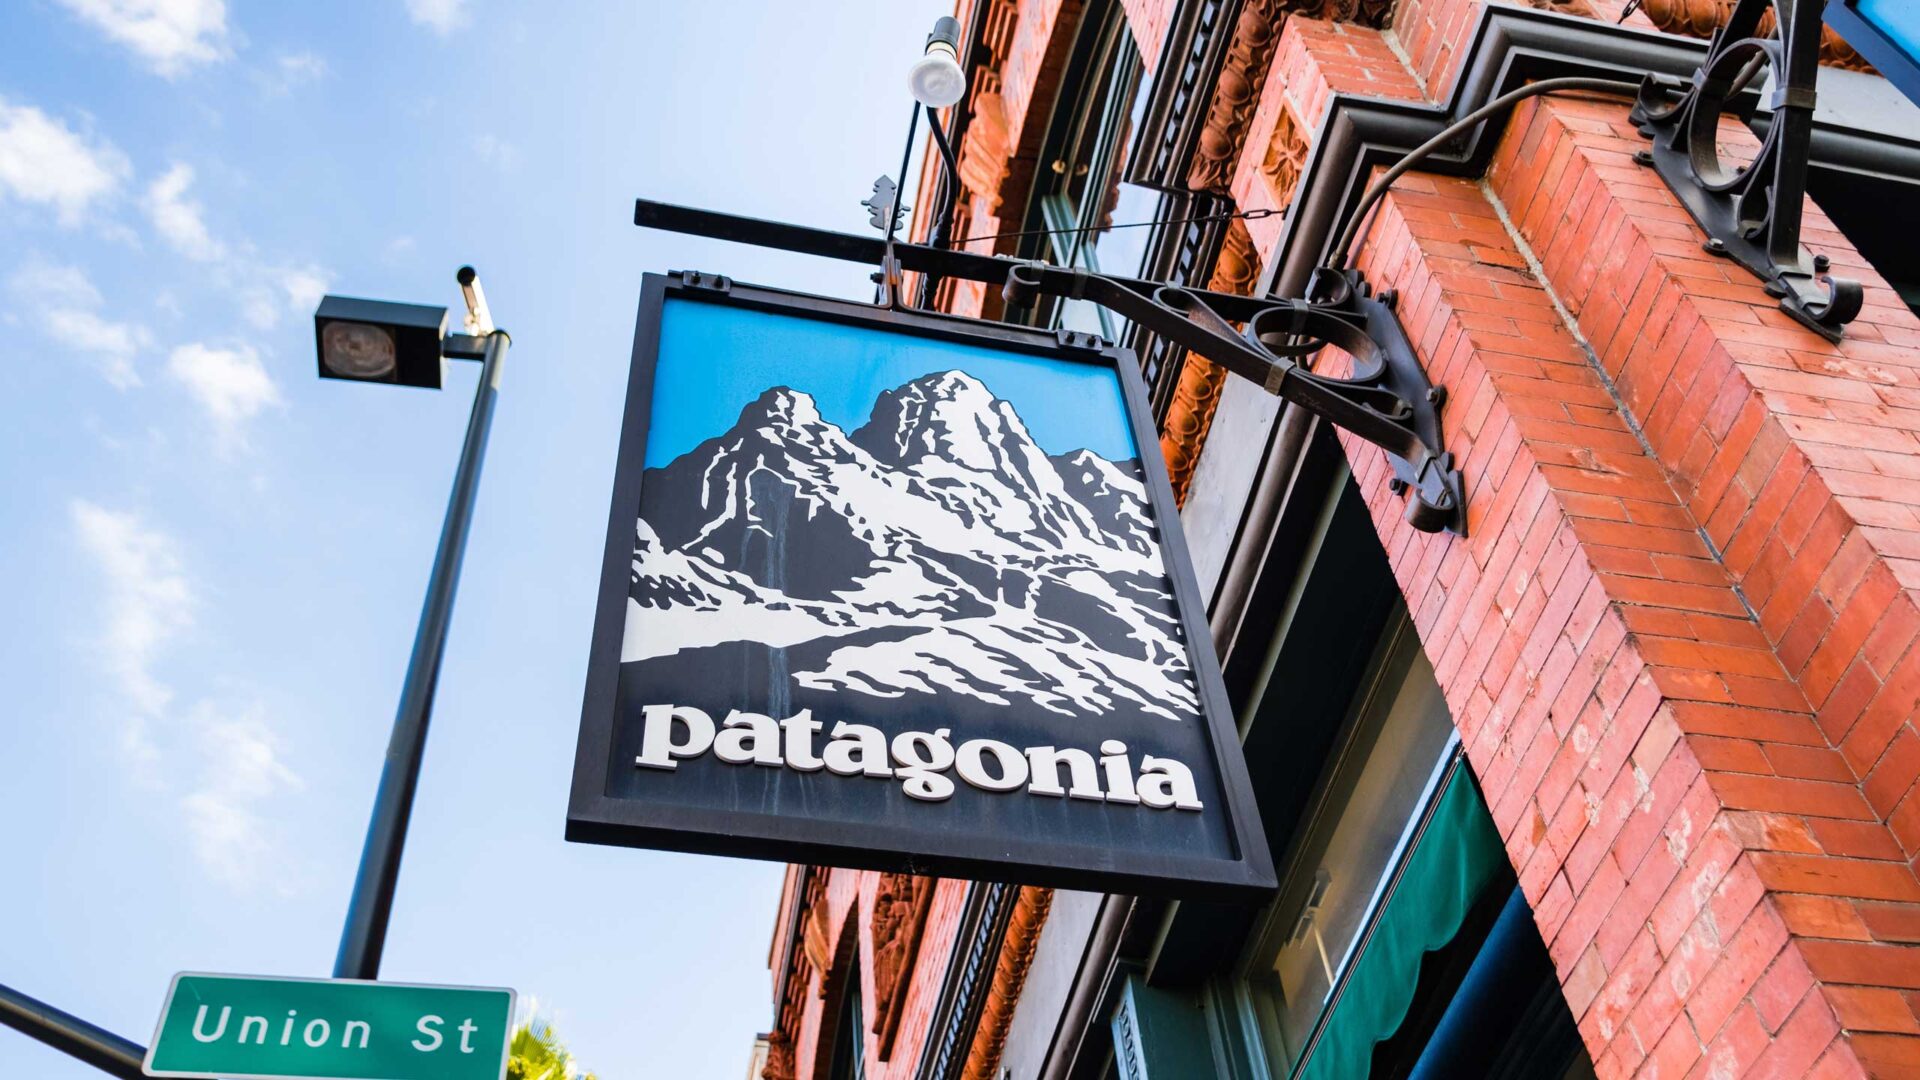 Blog - Brand Focus: Patagonia